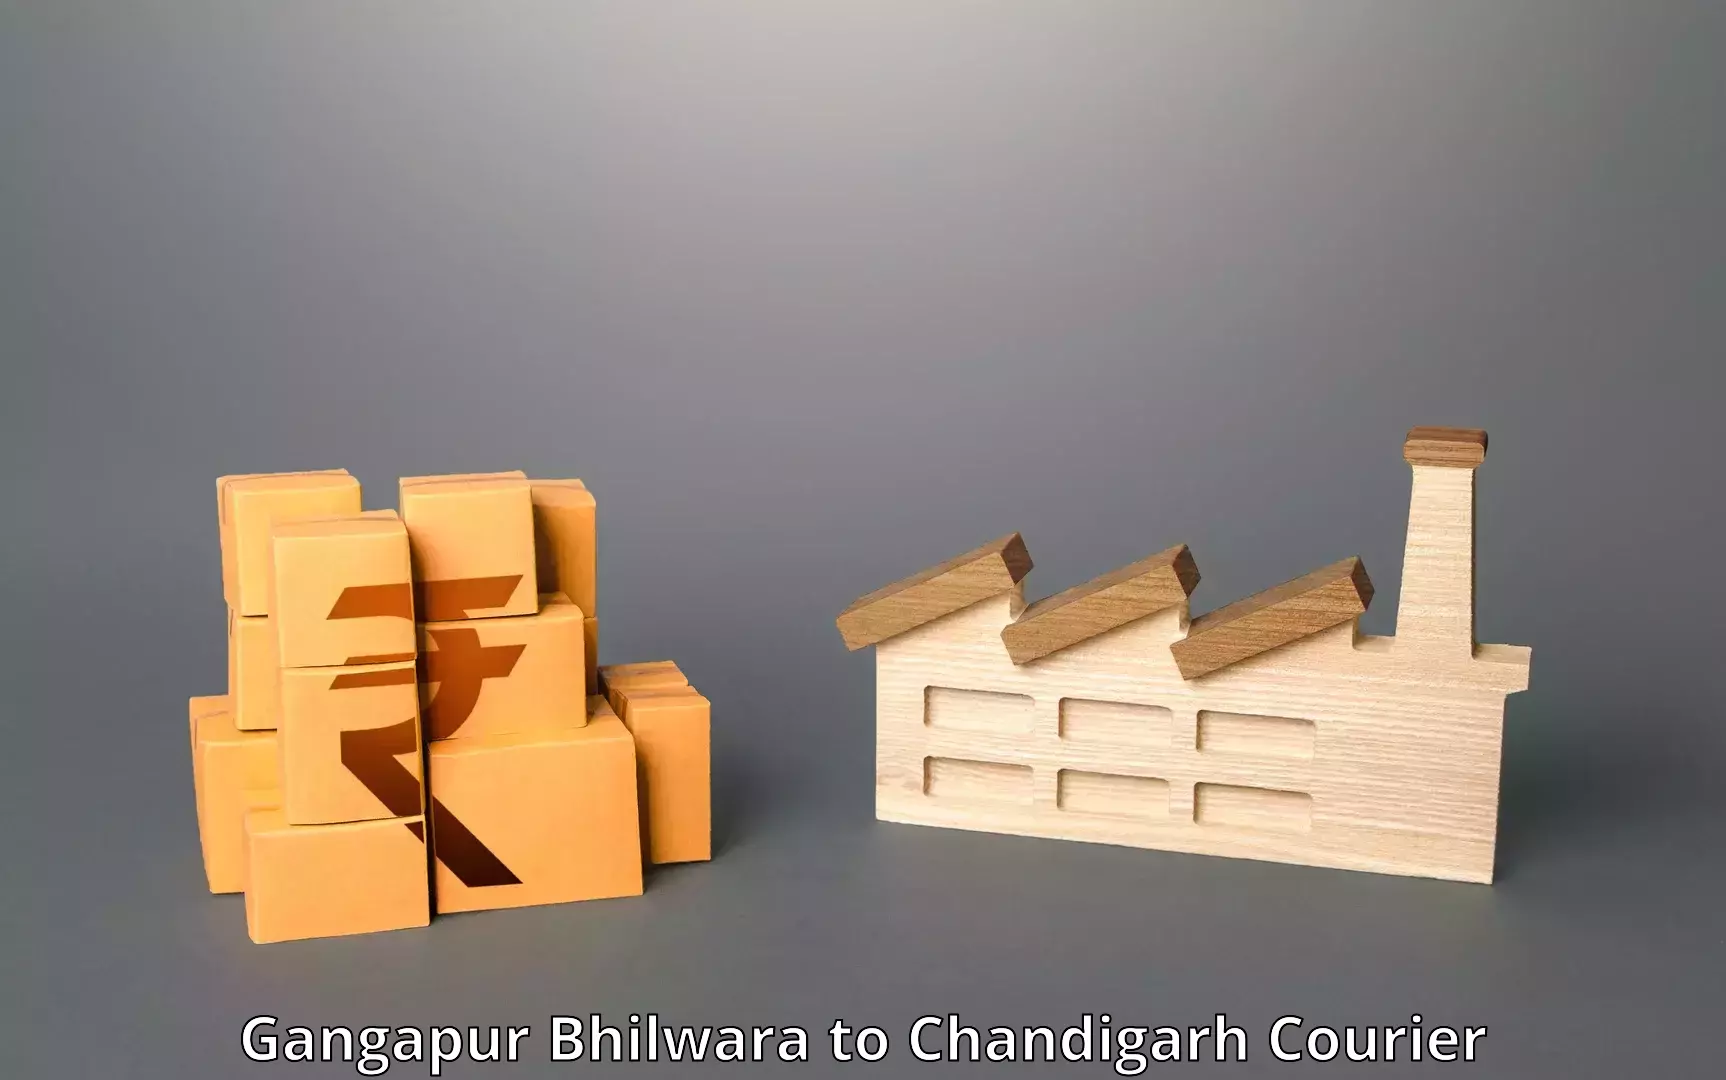 Package delivery network Gangapur Bhilwara to Kharar